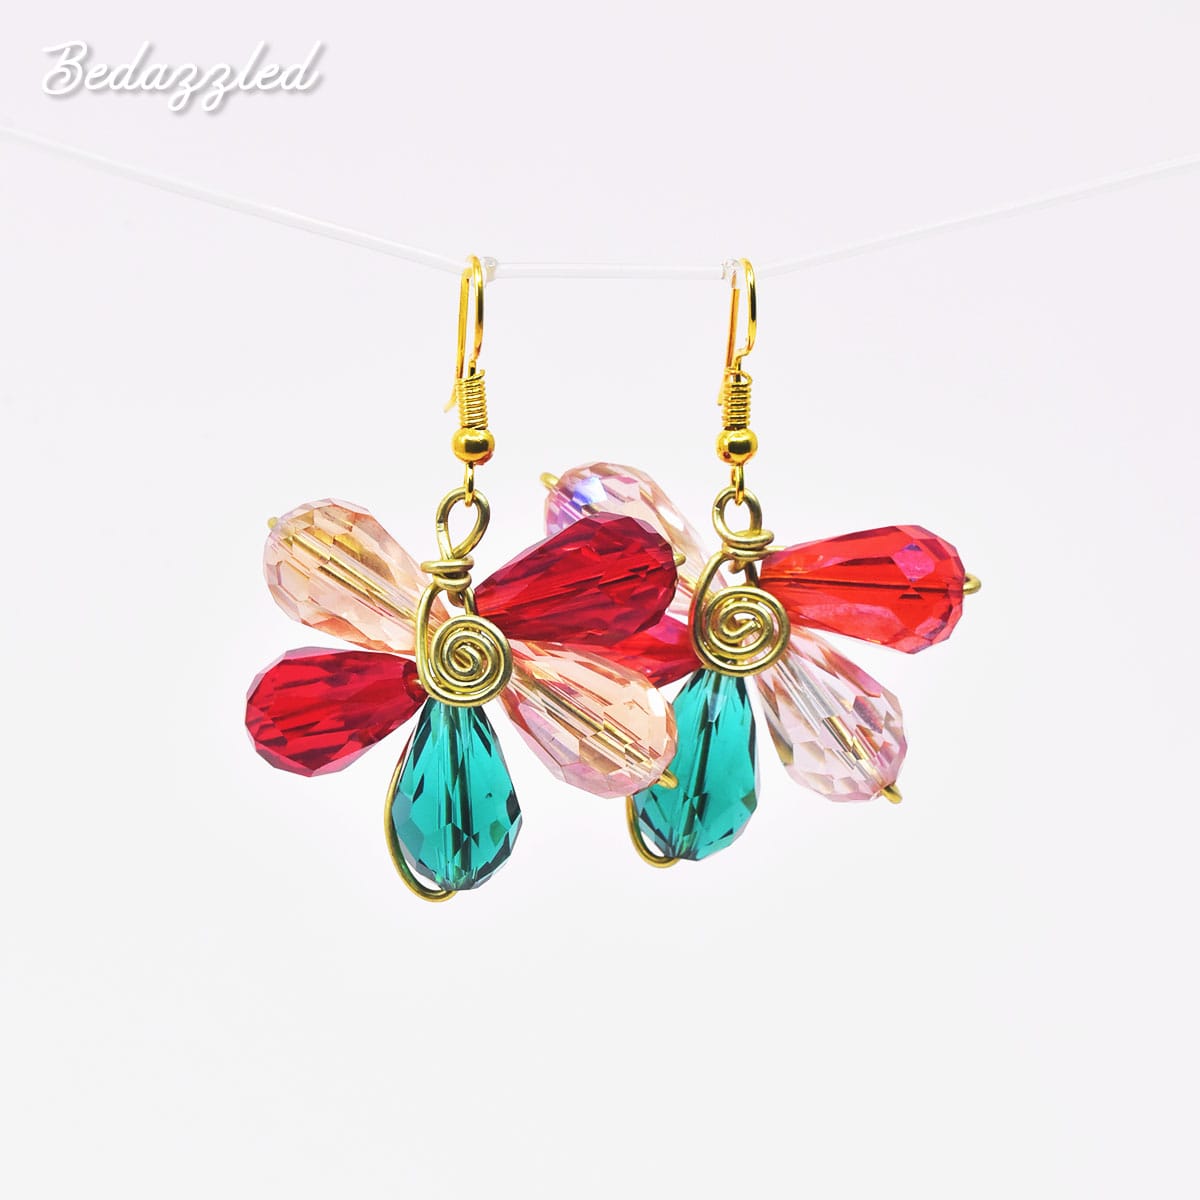 Bejeweled Style 1 - Earrings